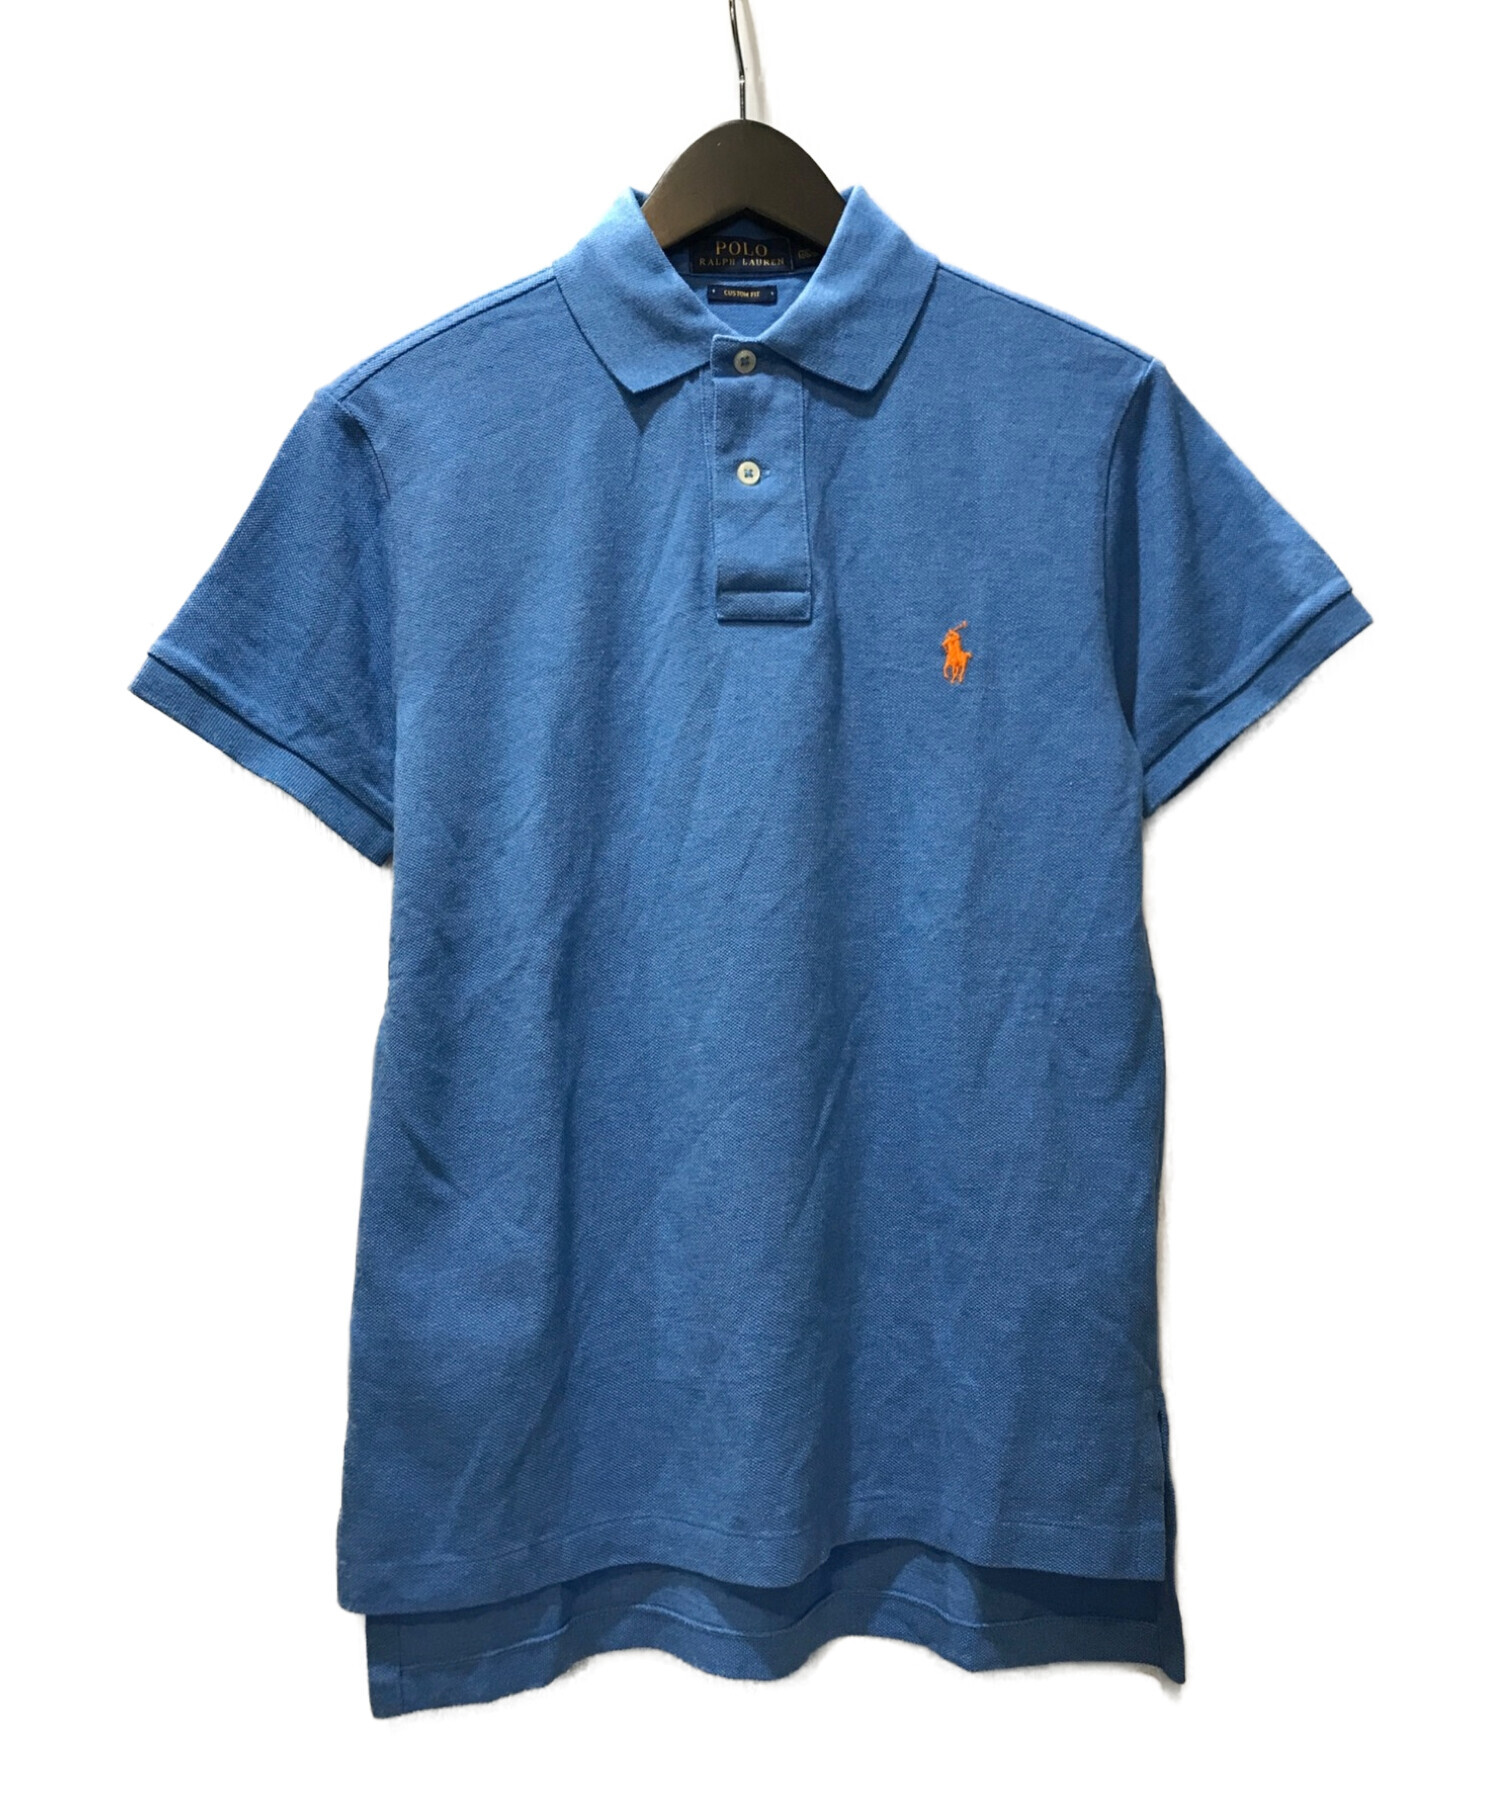 POLO RALPH LAUREN (ポロ・ラルフローレン) CUSTOM FIT カスタムフィット ポロシャツ ブルー サイズ:XS 165/88A